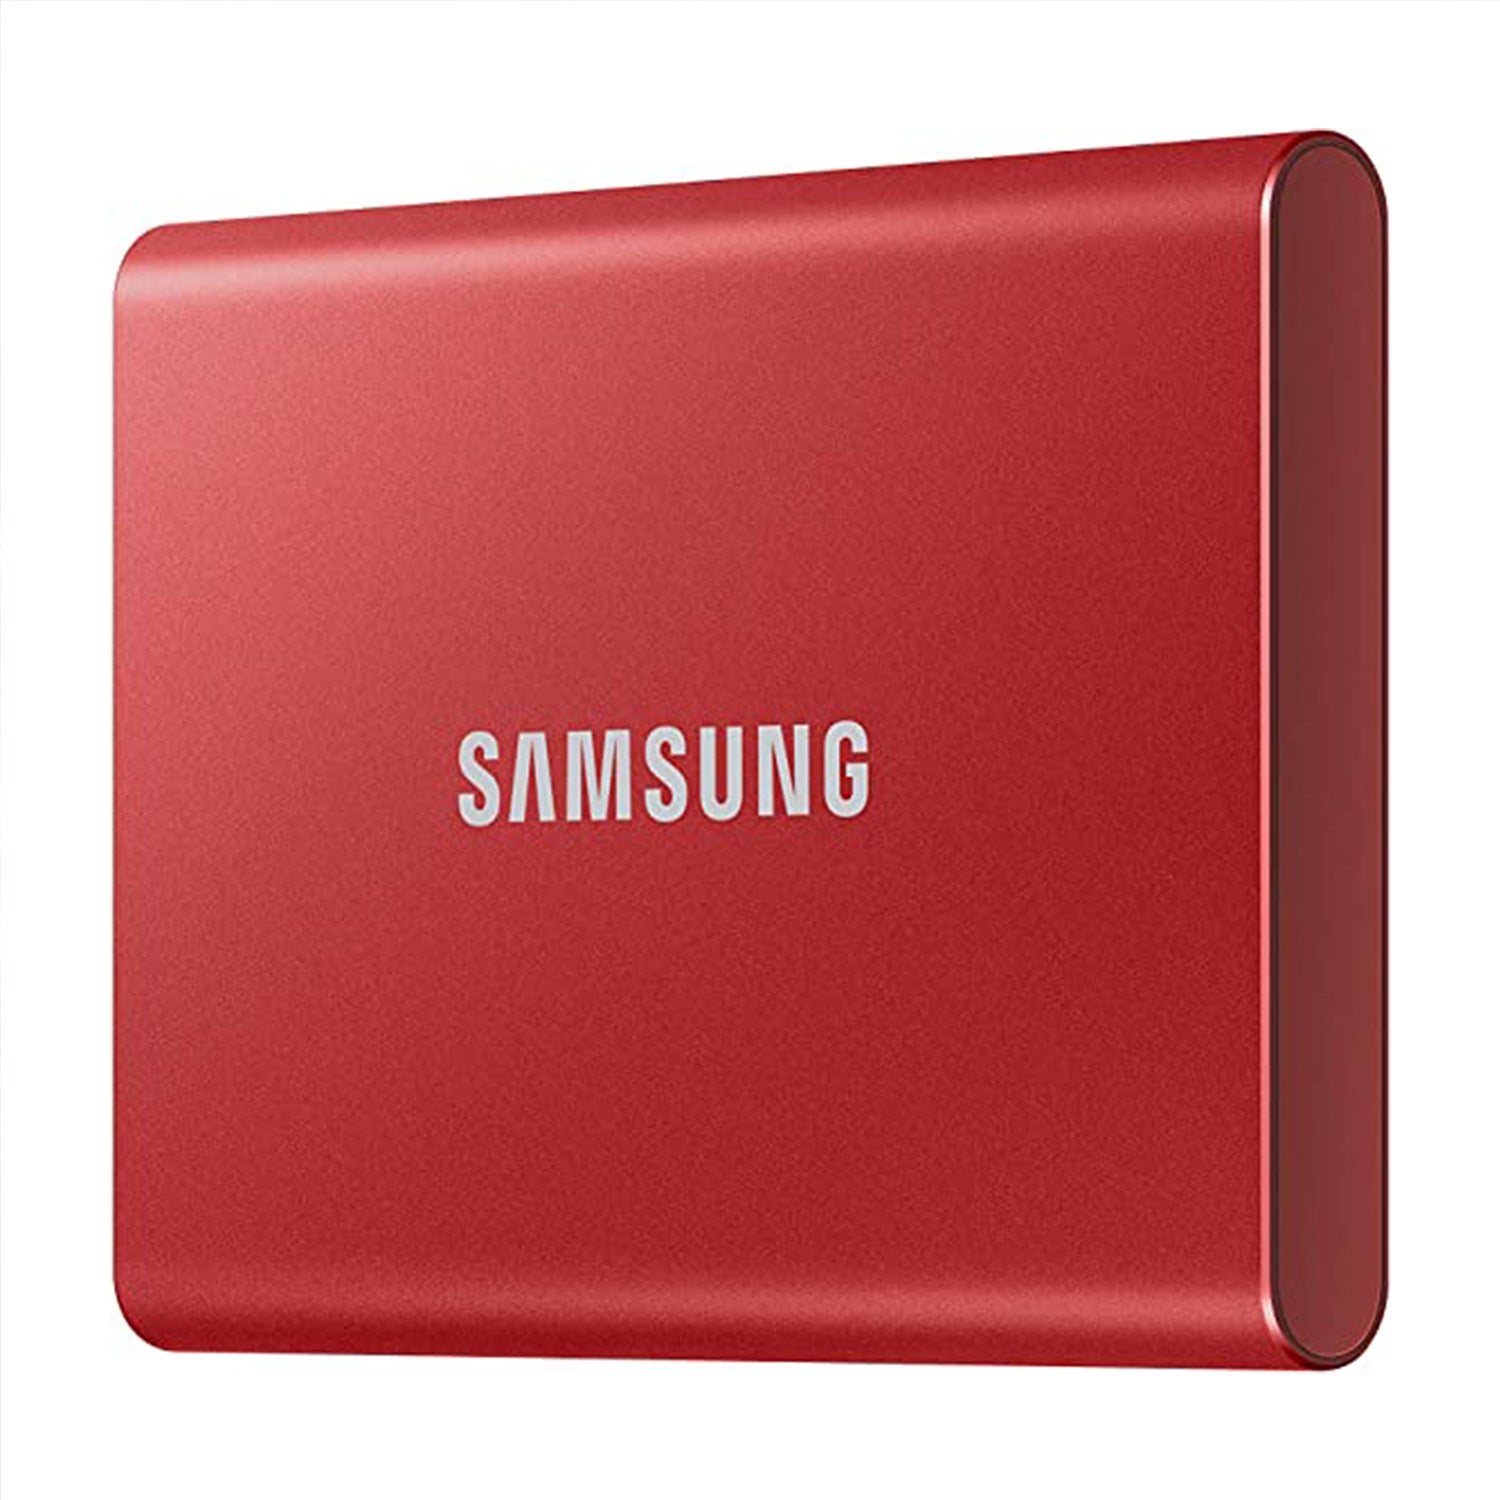 High-Speed SAMSUNG T7 Portable SSD - USB 3.2 - 500GB Solid State Drive - Stylish Metallic RED - Fast Data Transfer (MU-PC500R/AM)